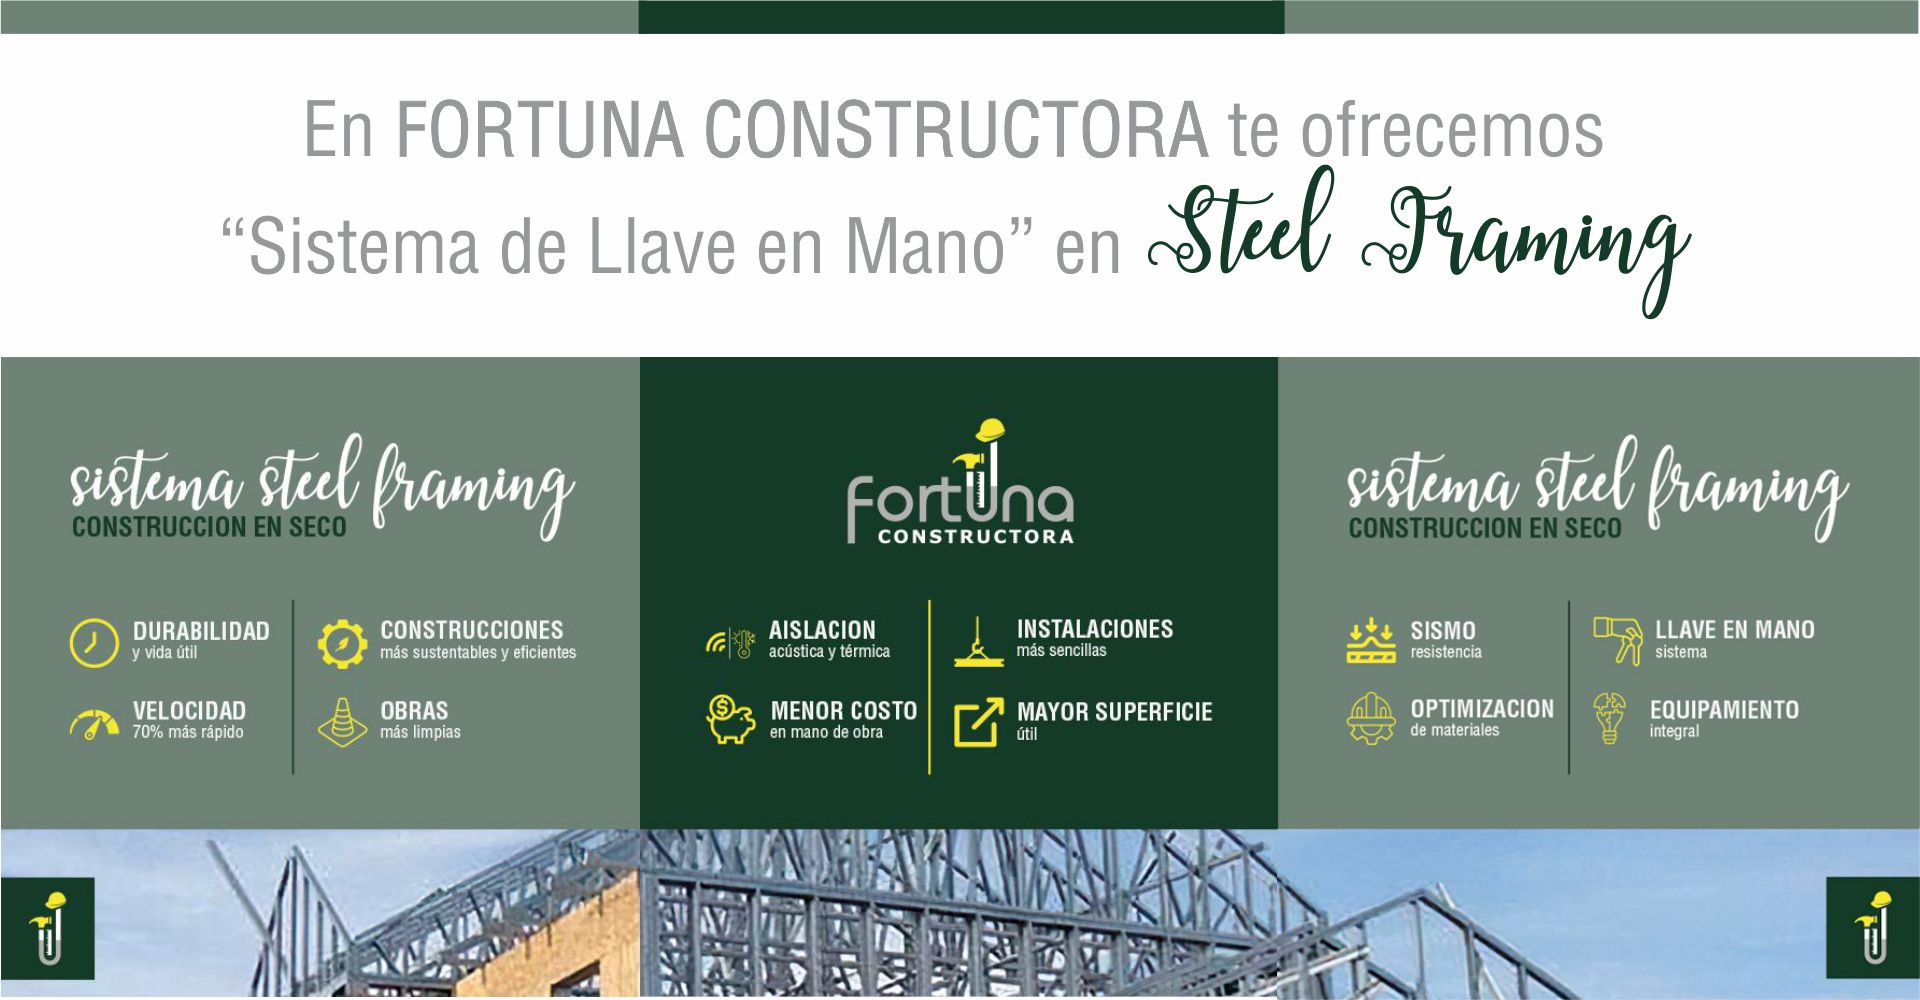 #SteelFraming #SteelFrame #FortunaConstructora #FortunaInmobiliaria